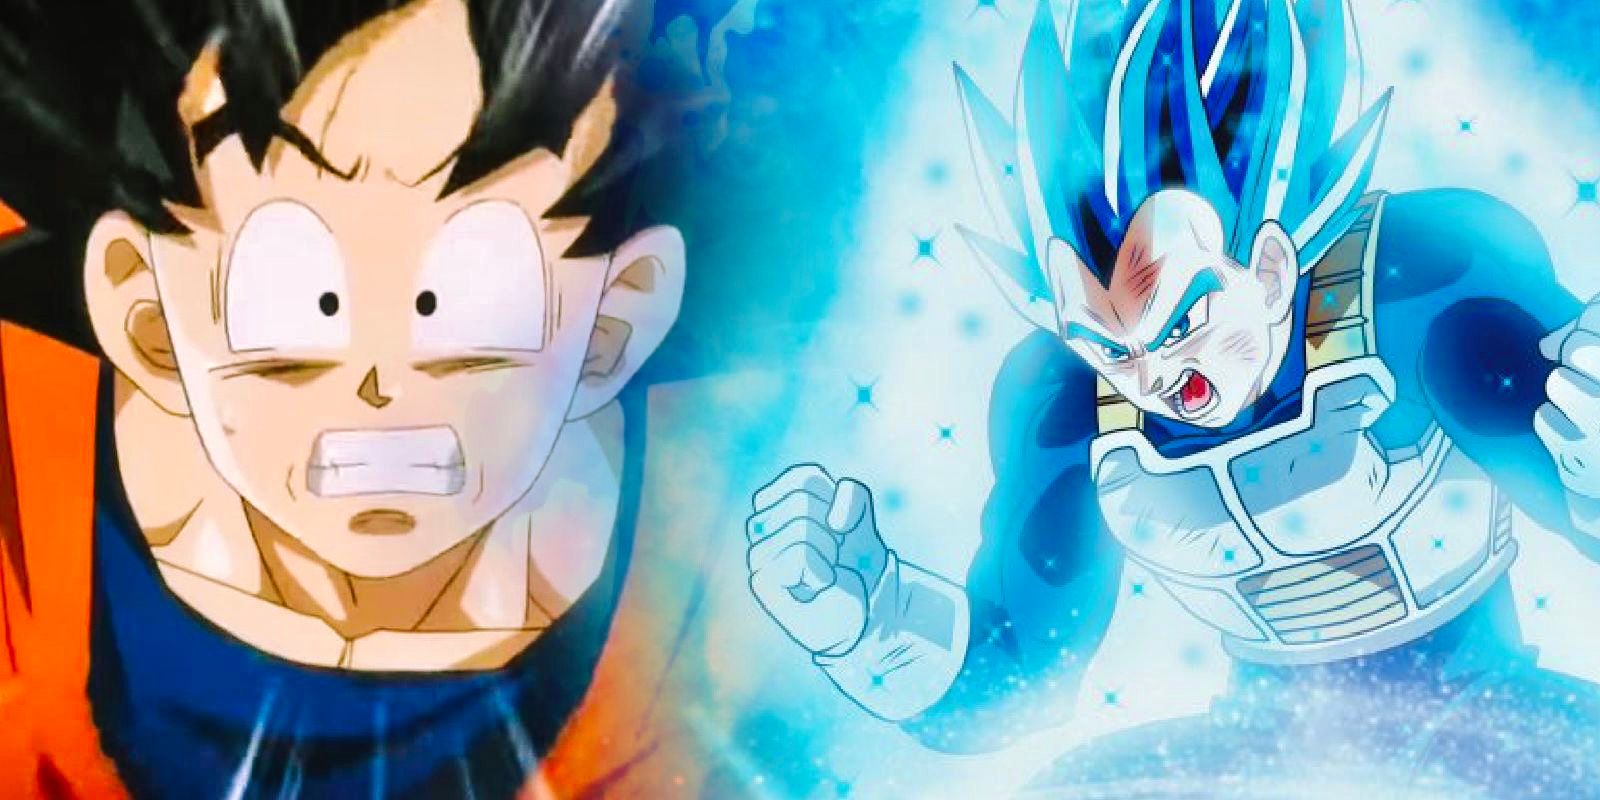 Vegeta Super Saiyan Blue in Dragon Ball Super and Goku looking scared